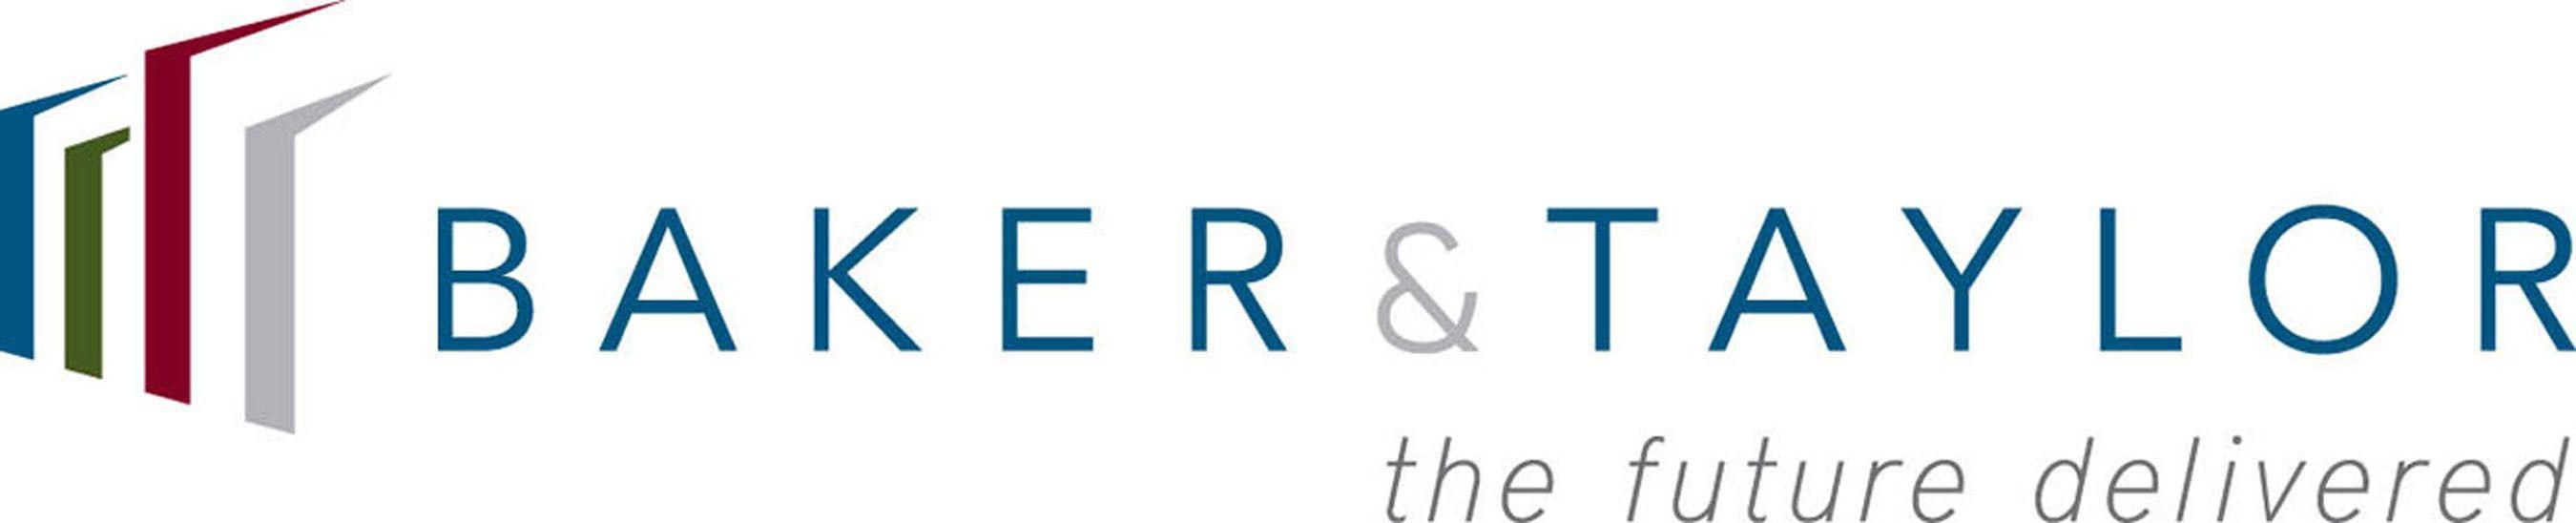 Google Taylor Logo - BAKER & TAYLOR LOGO | Good e-Reader